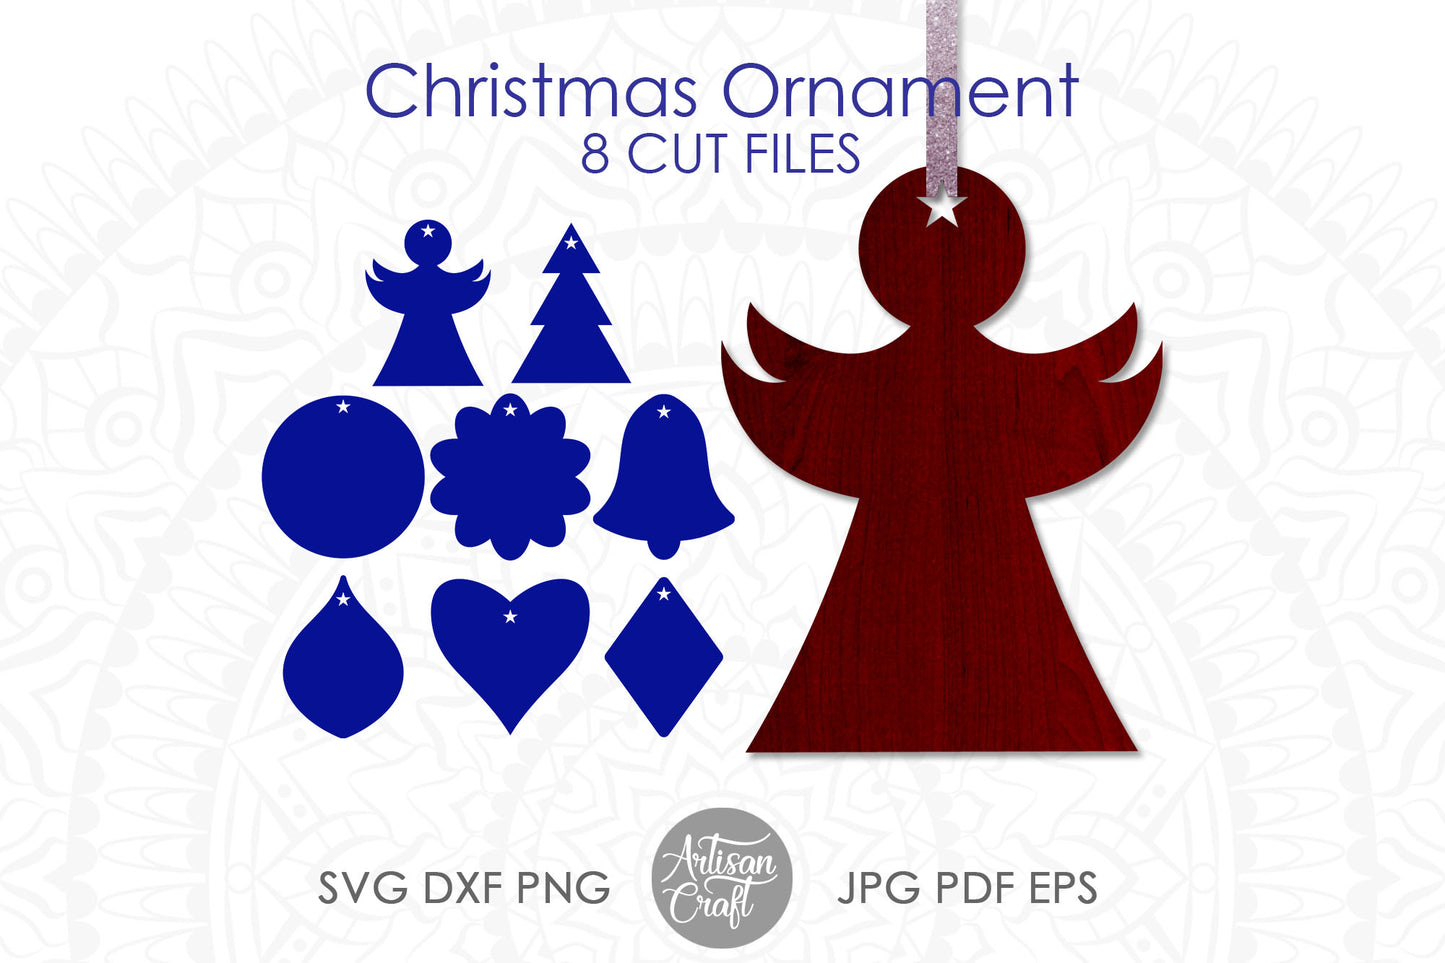 Christmas ornament SVG